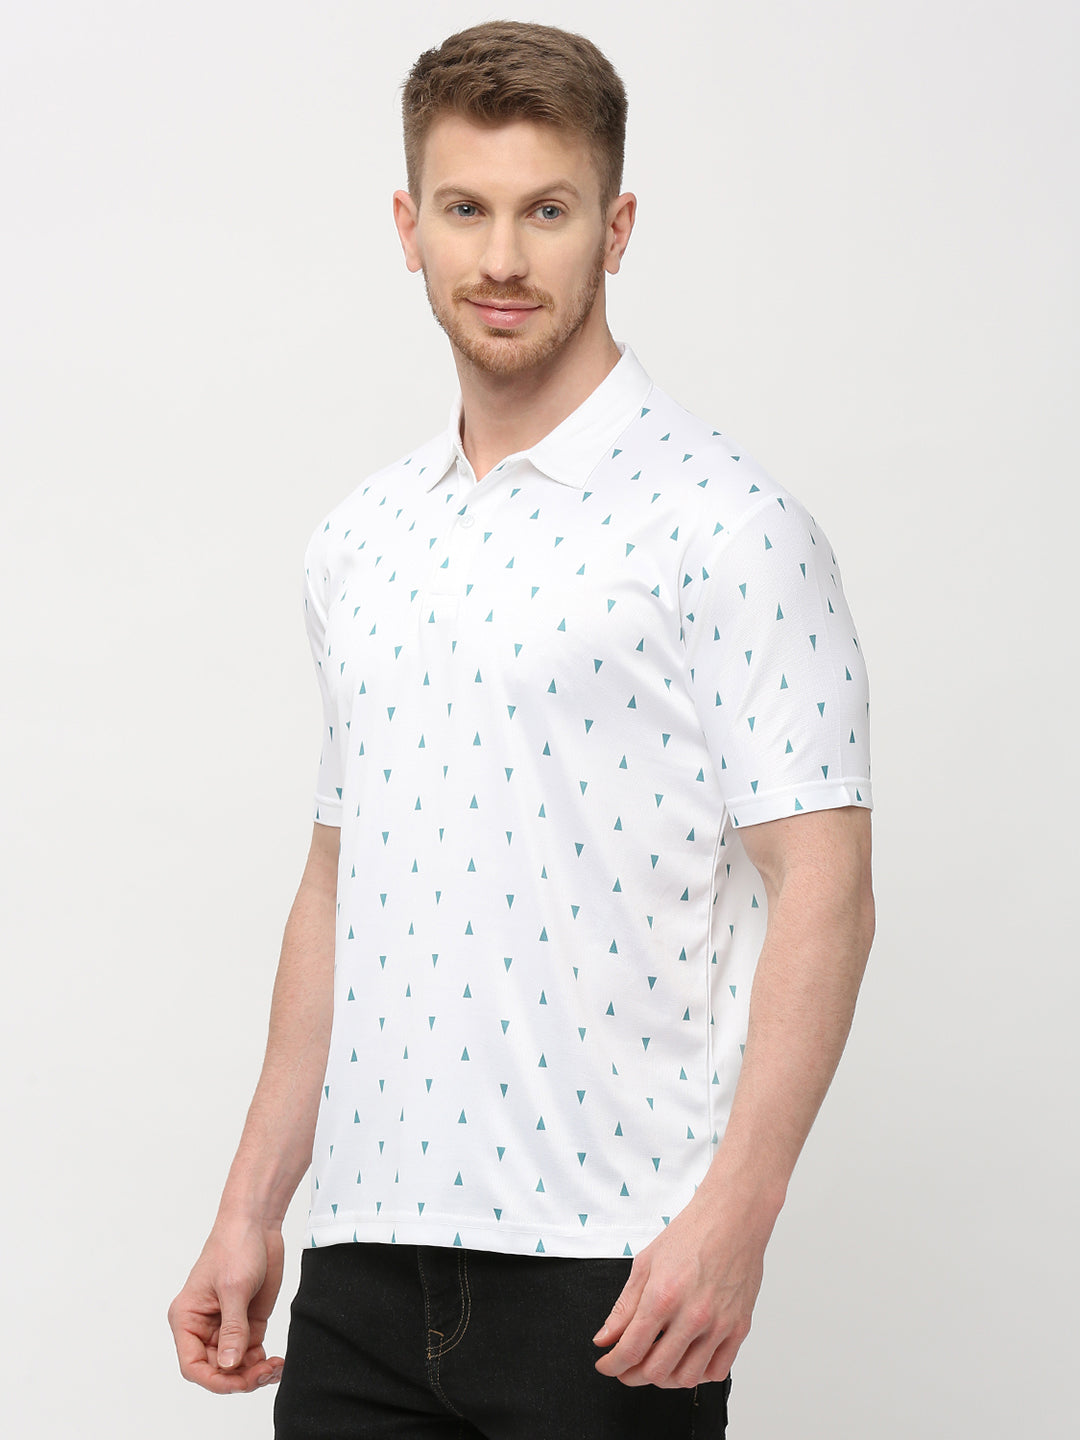 Polo T-shirt (Triangle Print) - White